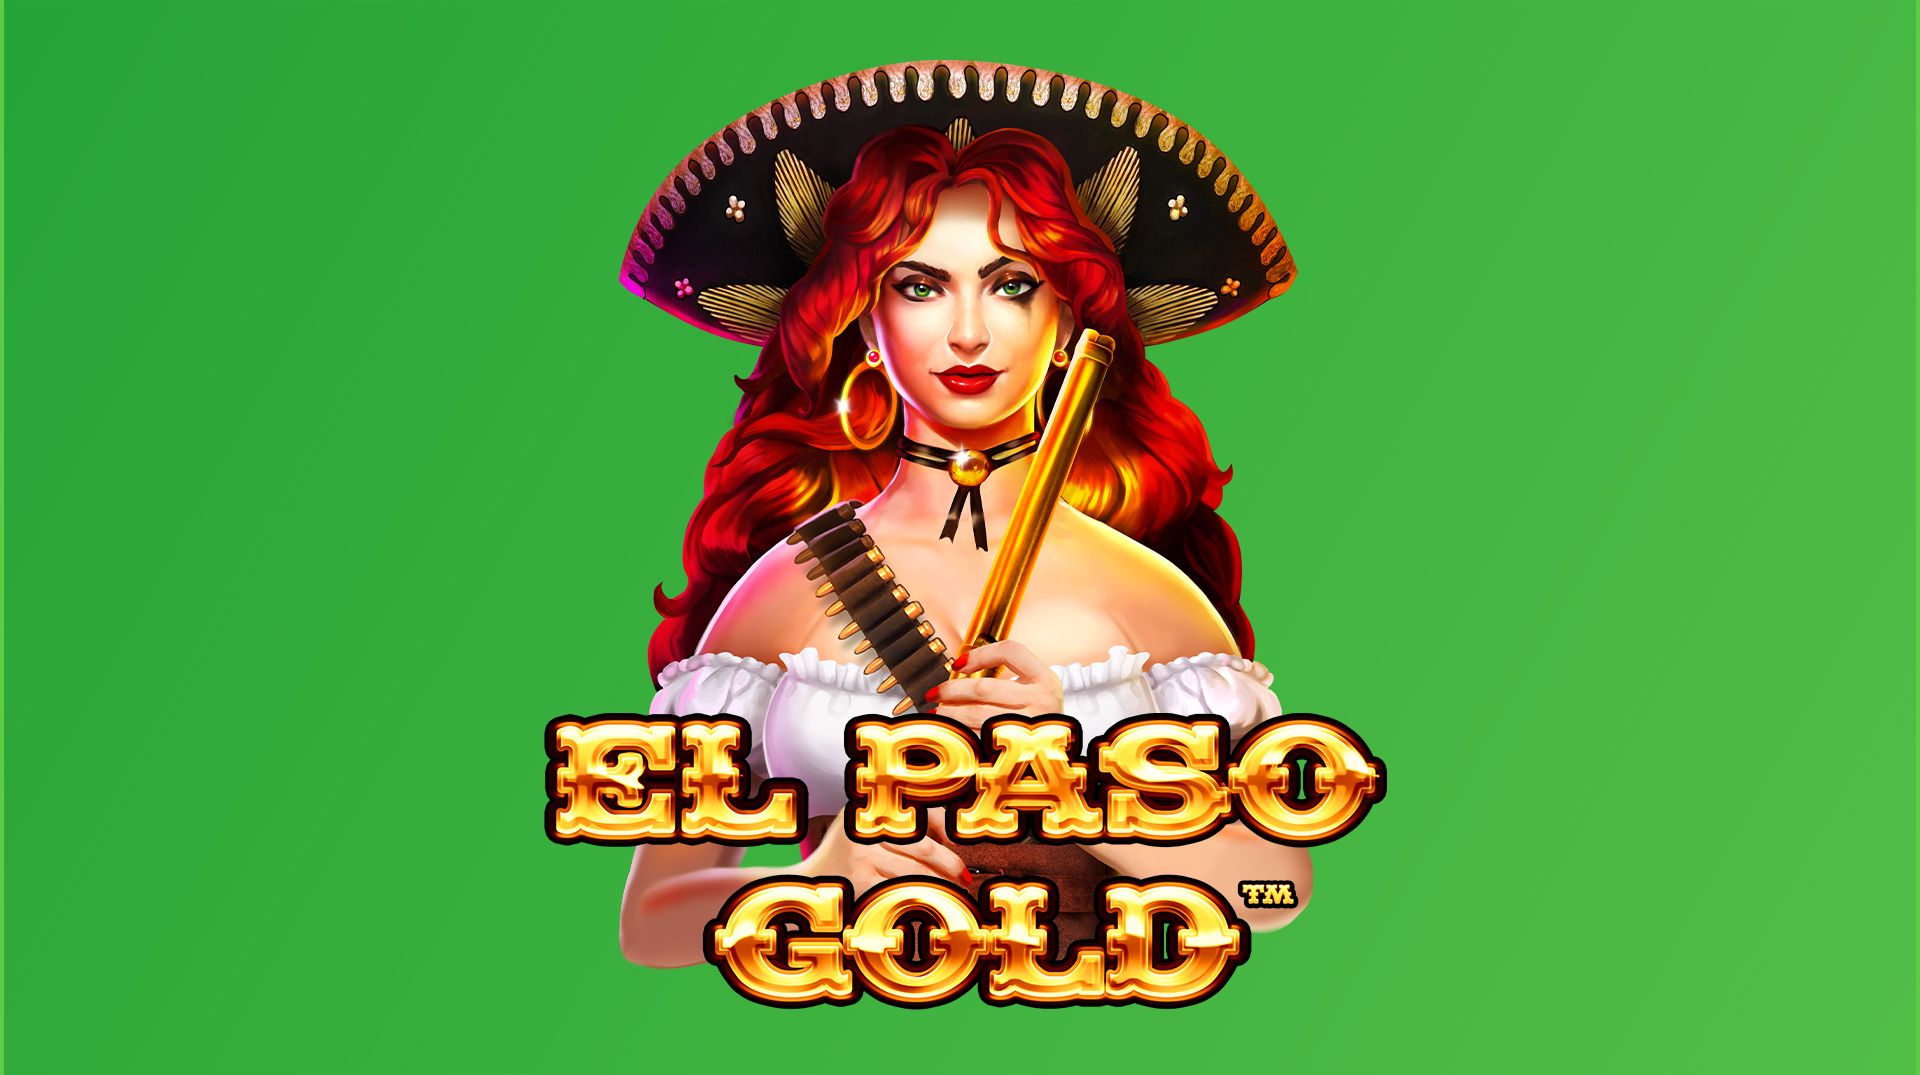 El Paso Gold slot machine online Betaland 2022